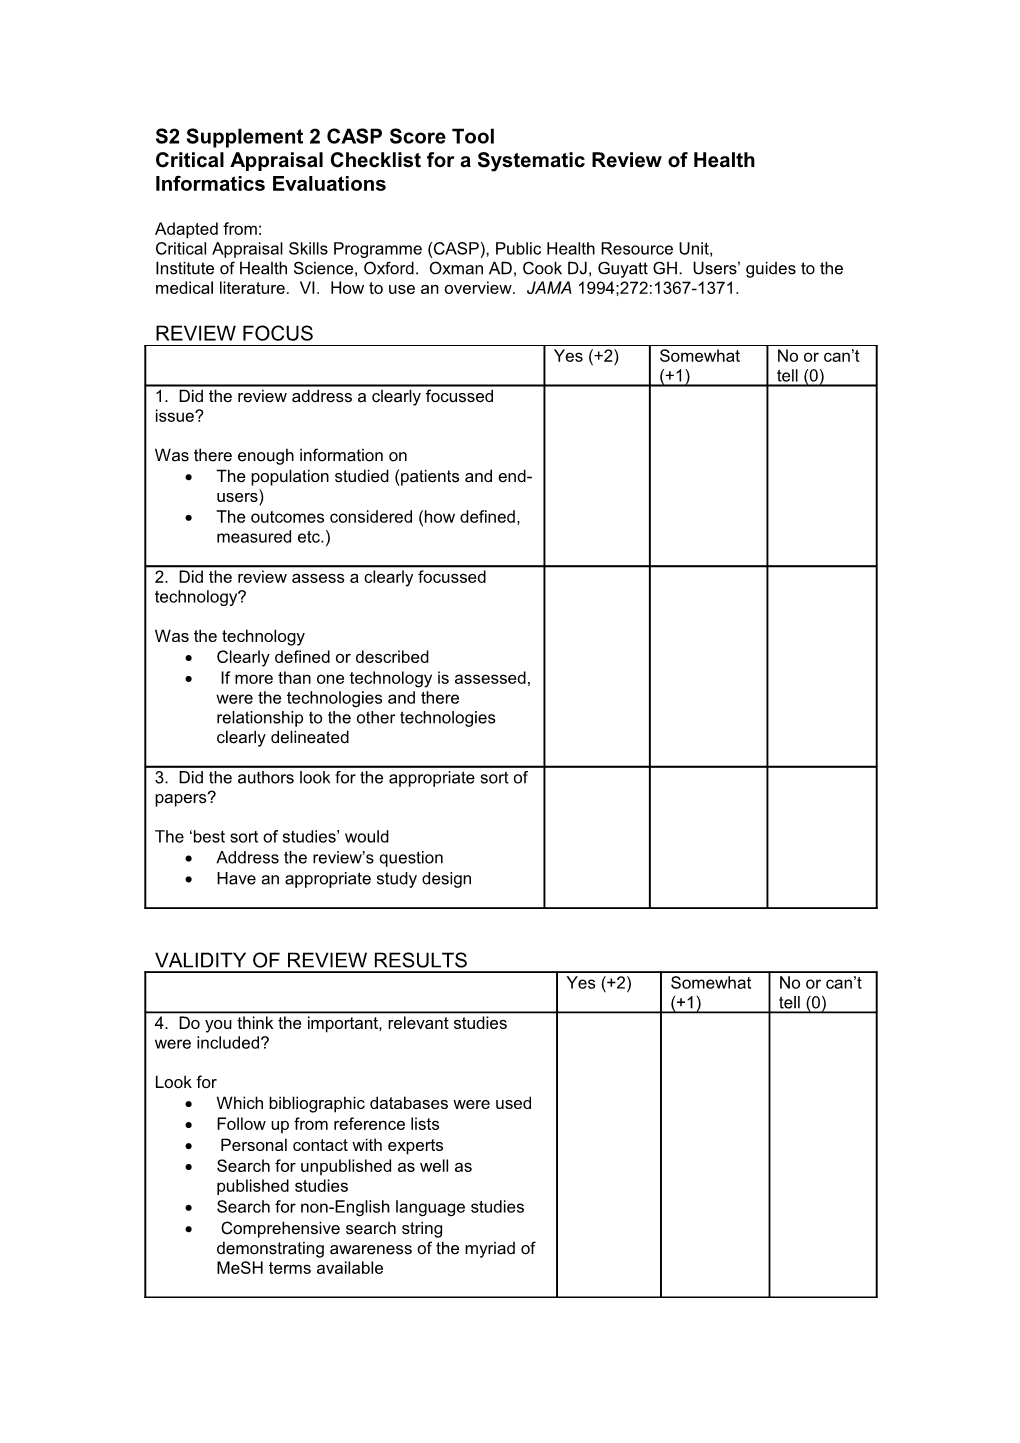 Appendix 2: Quality Assessment Form (CASP)